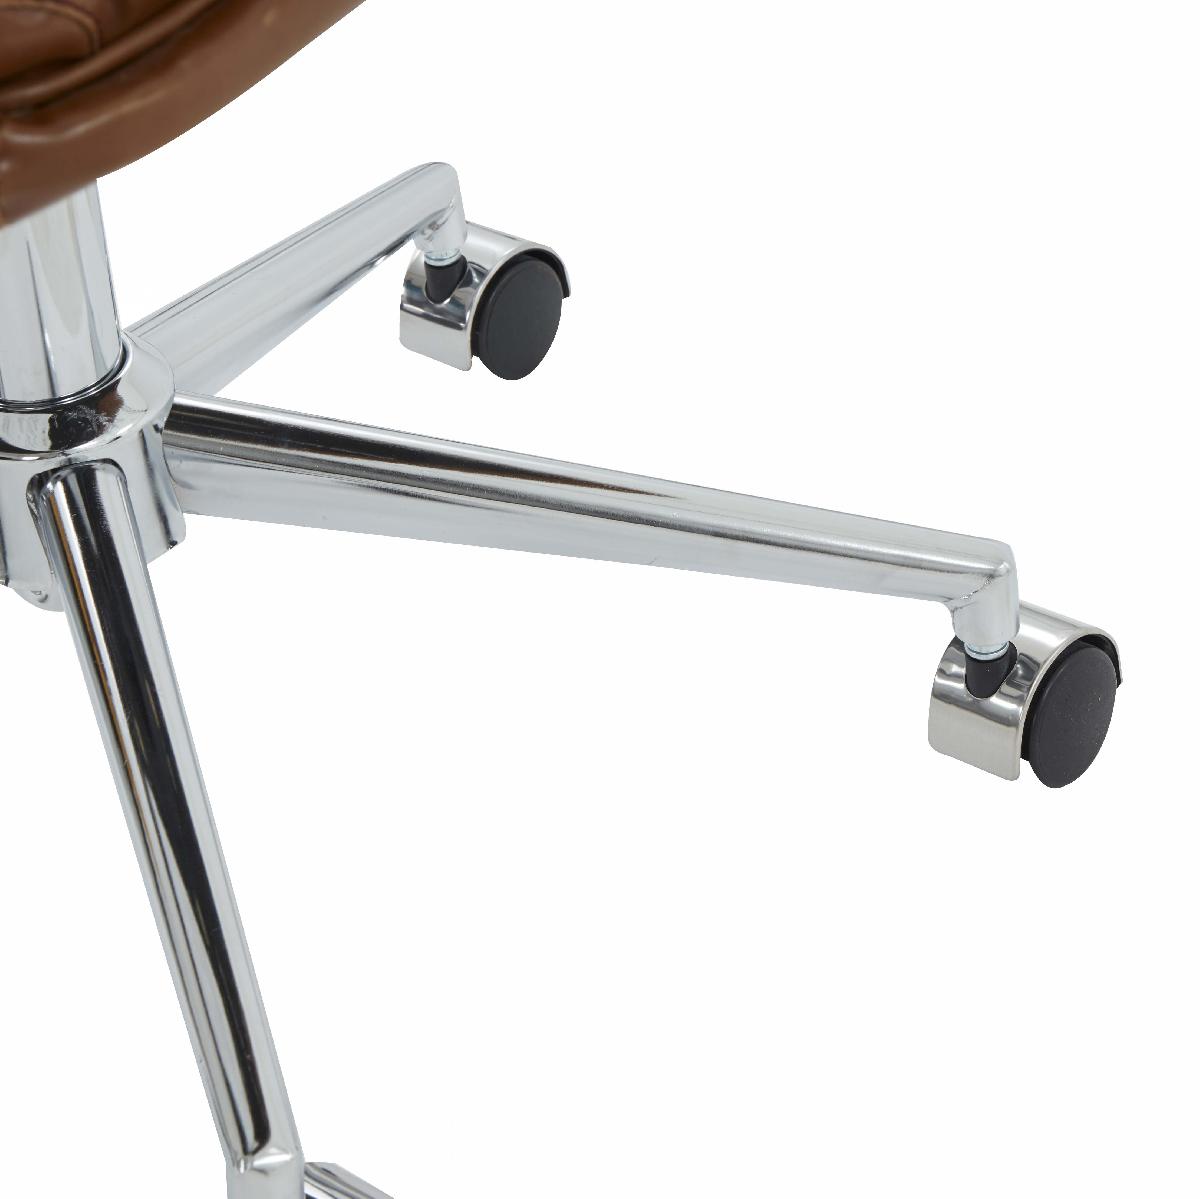 Safavieh Couture Decolin Swivel Desk Chair - Brown / Silver